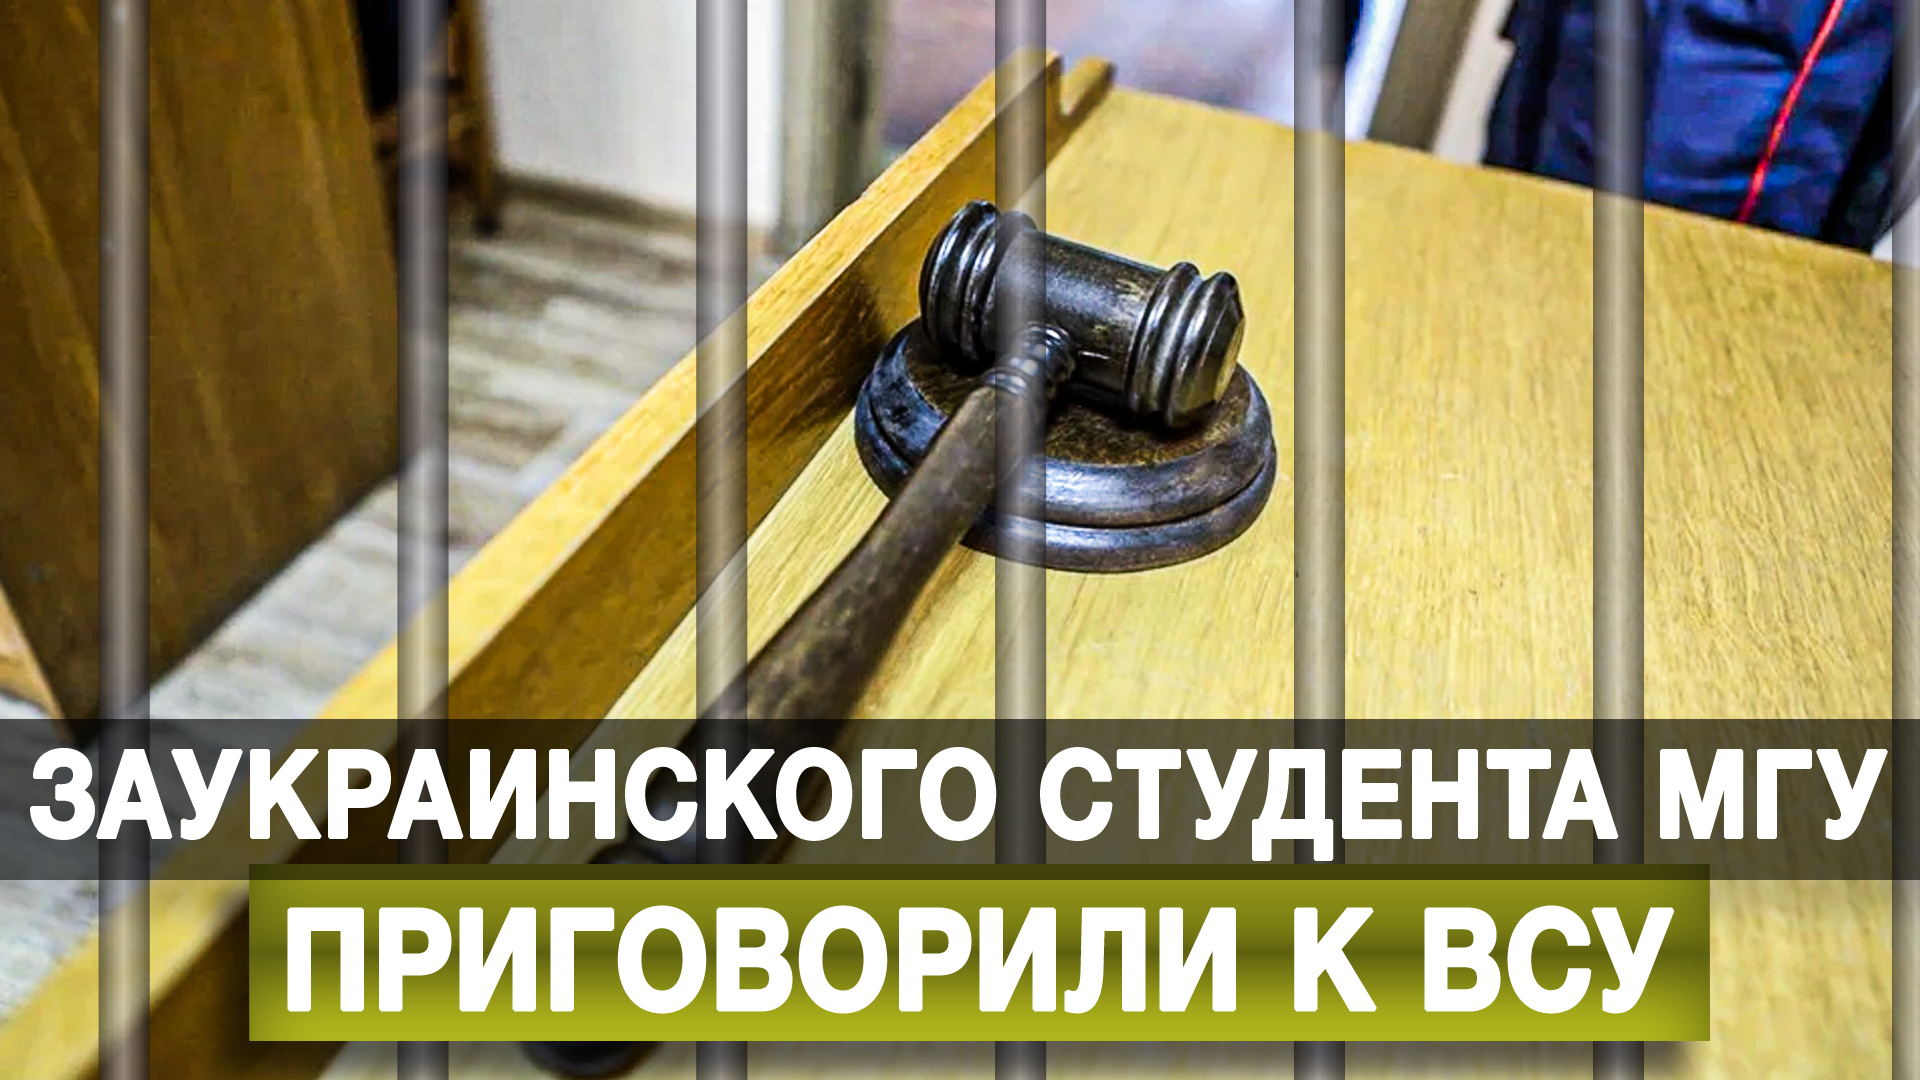 Заукраинского студента МГУ приговорили к ВСУ